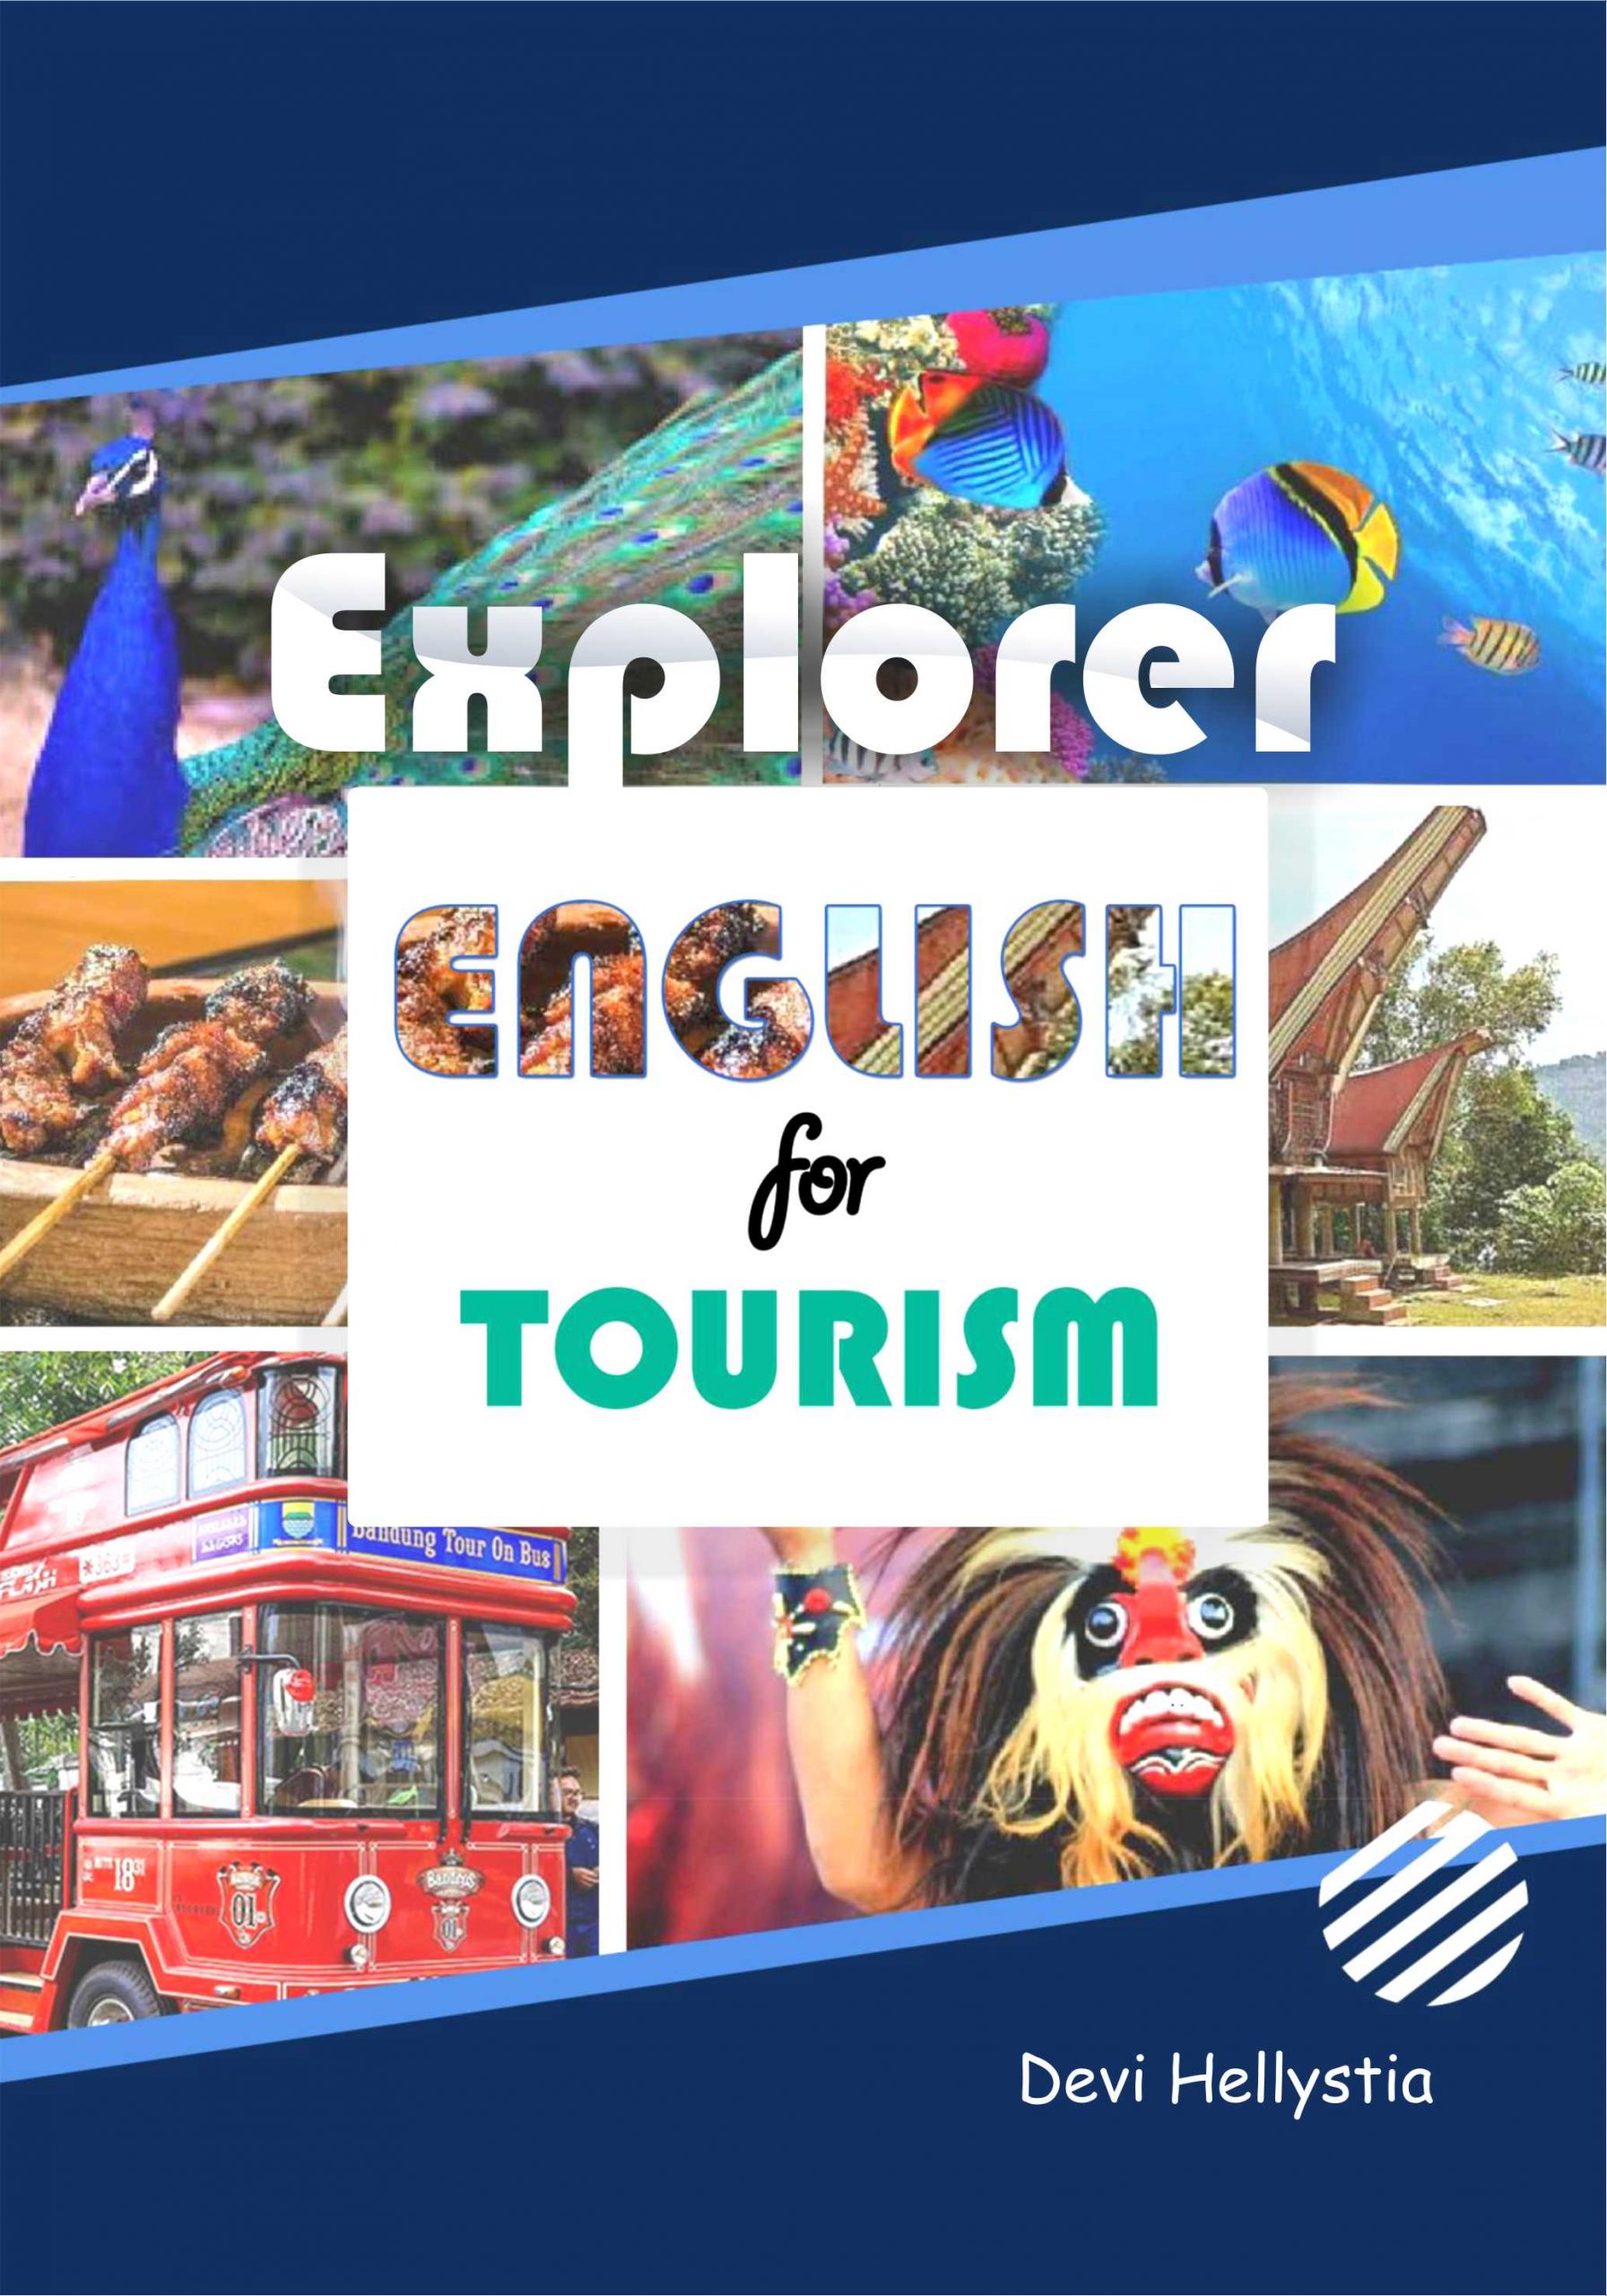 english for tourism books